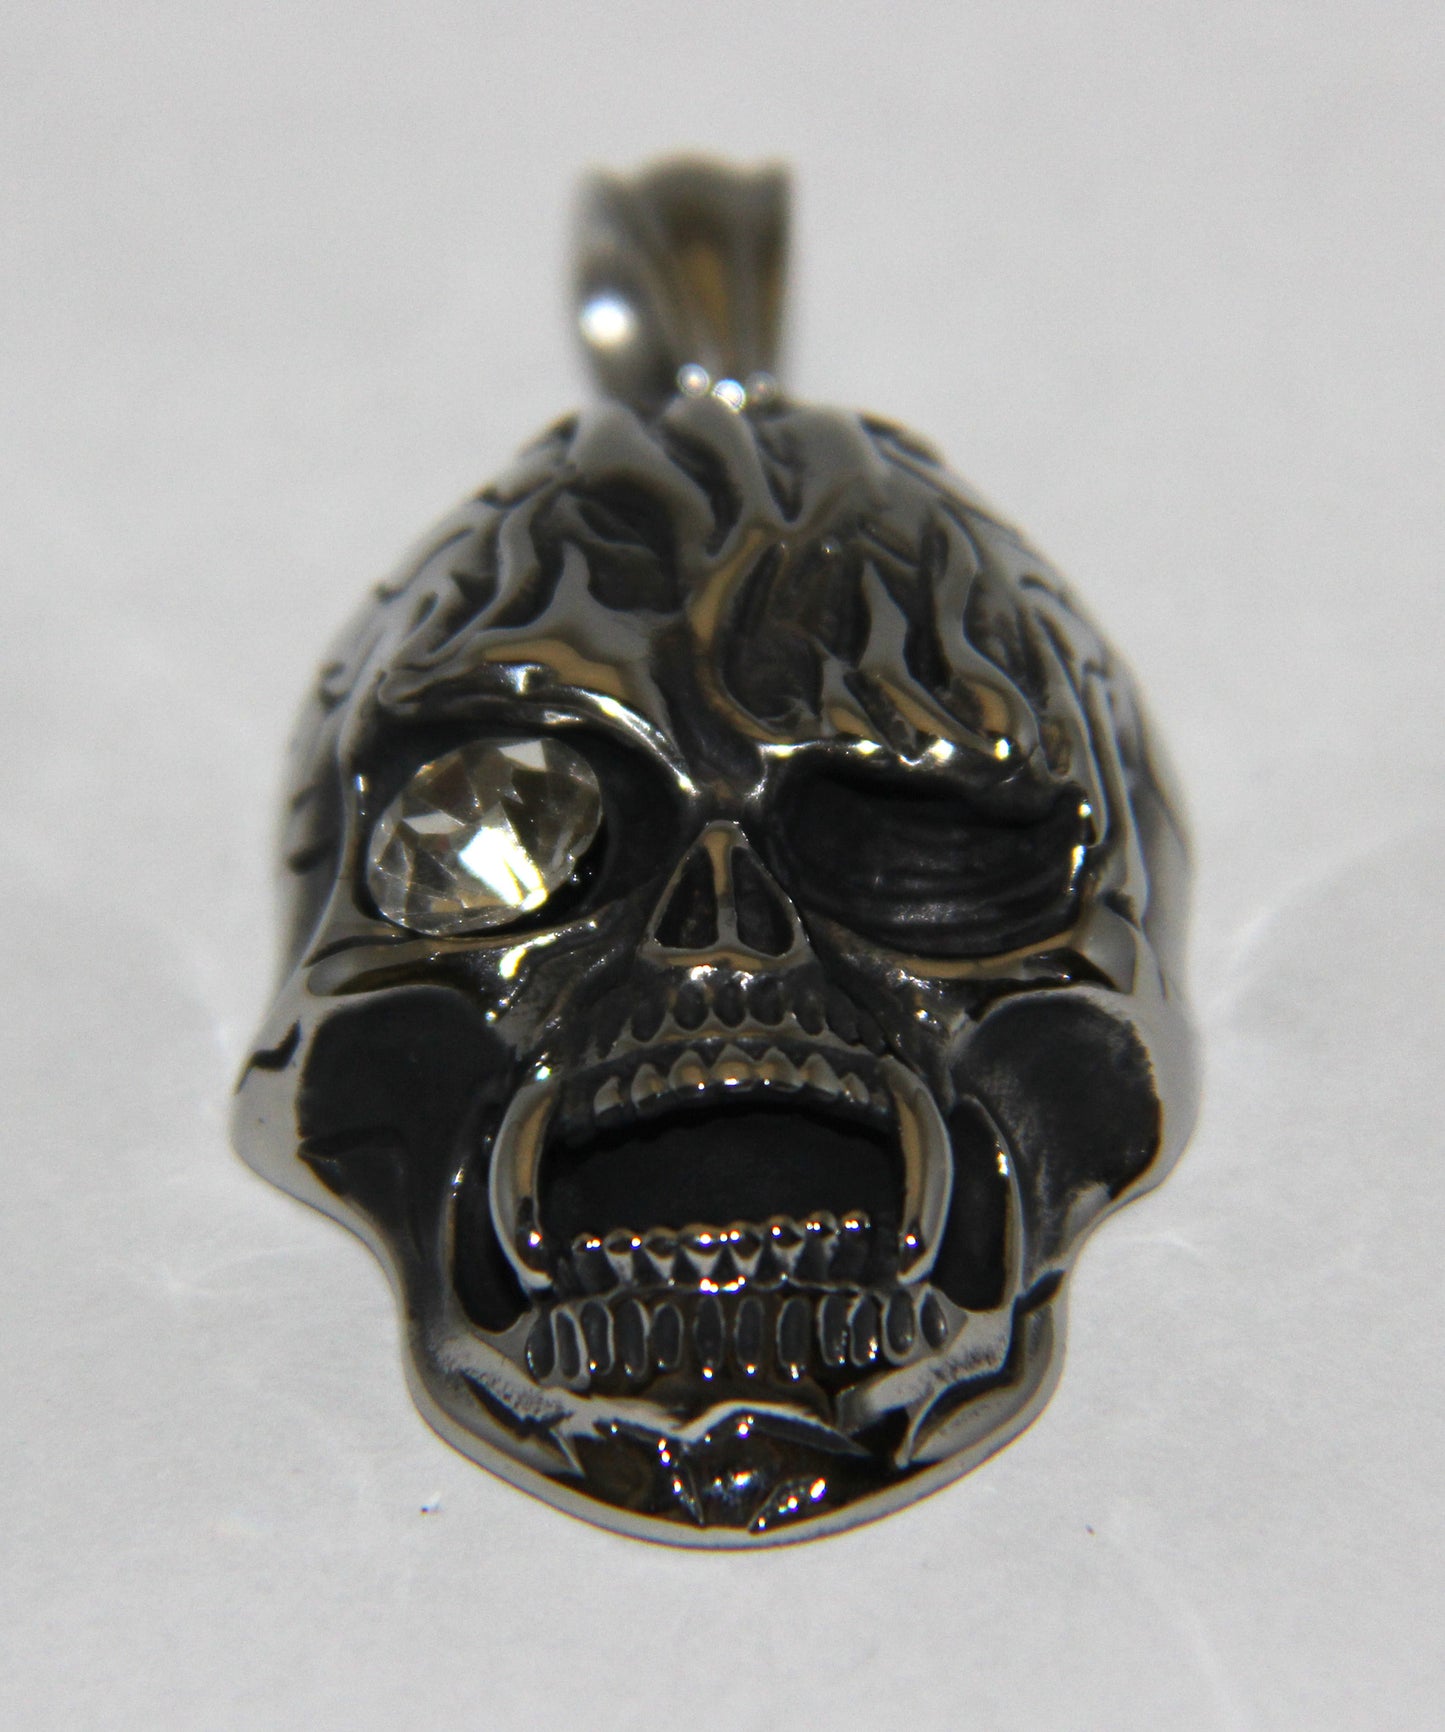 Stainless Steel Large Vampire Skull Pendant with White Stone- UDINC0475